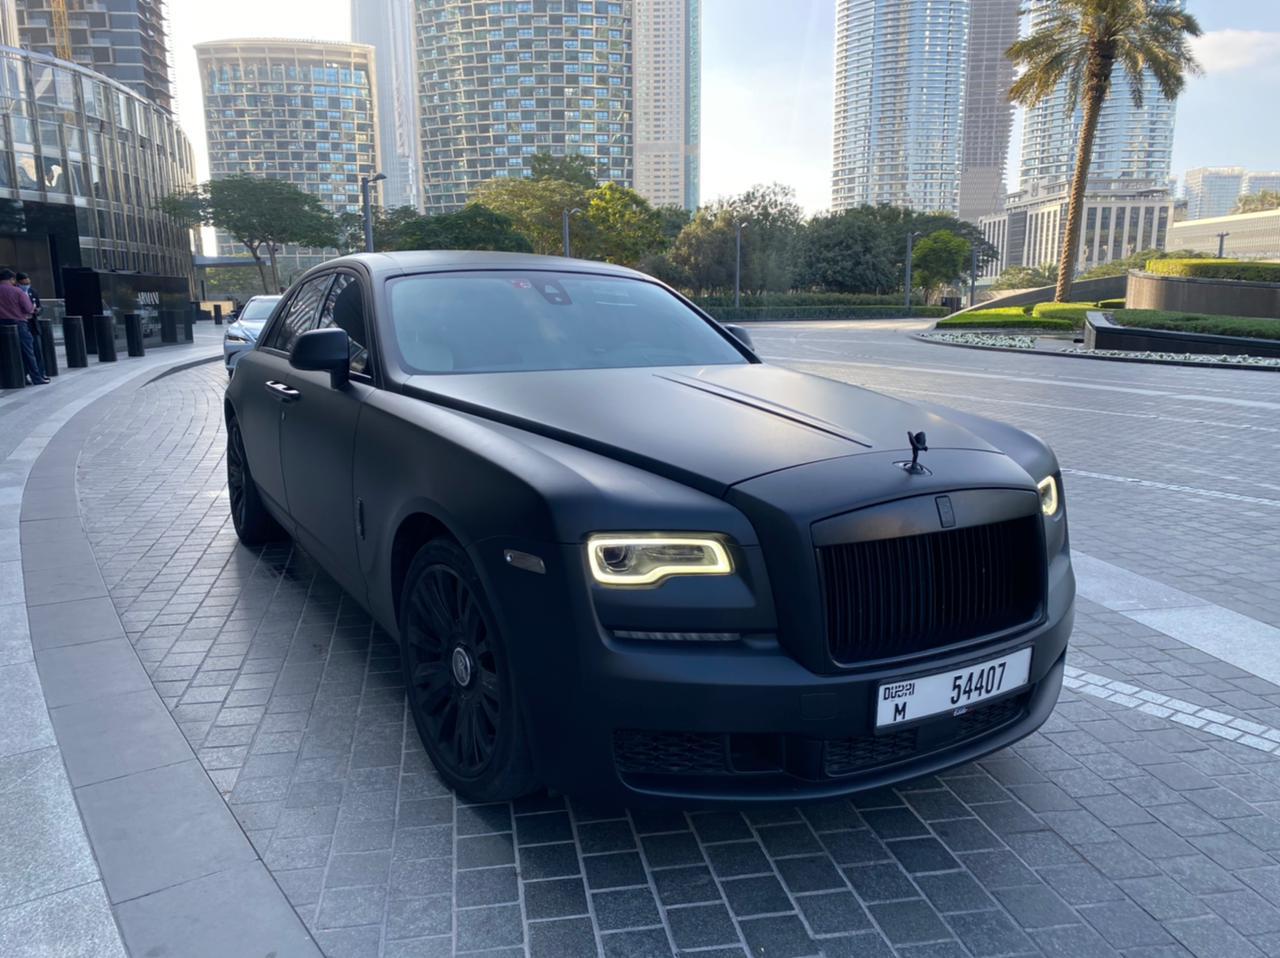 ROLLS-ROYCE GHOST 2019 Listed By Exford | Rent a Car Dubai | Cheap Car Rental Dubai AED 50/Day | Car Hire UAE